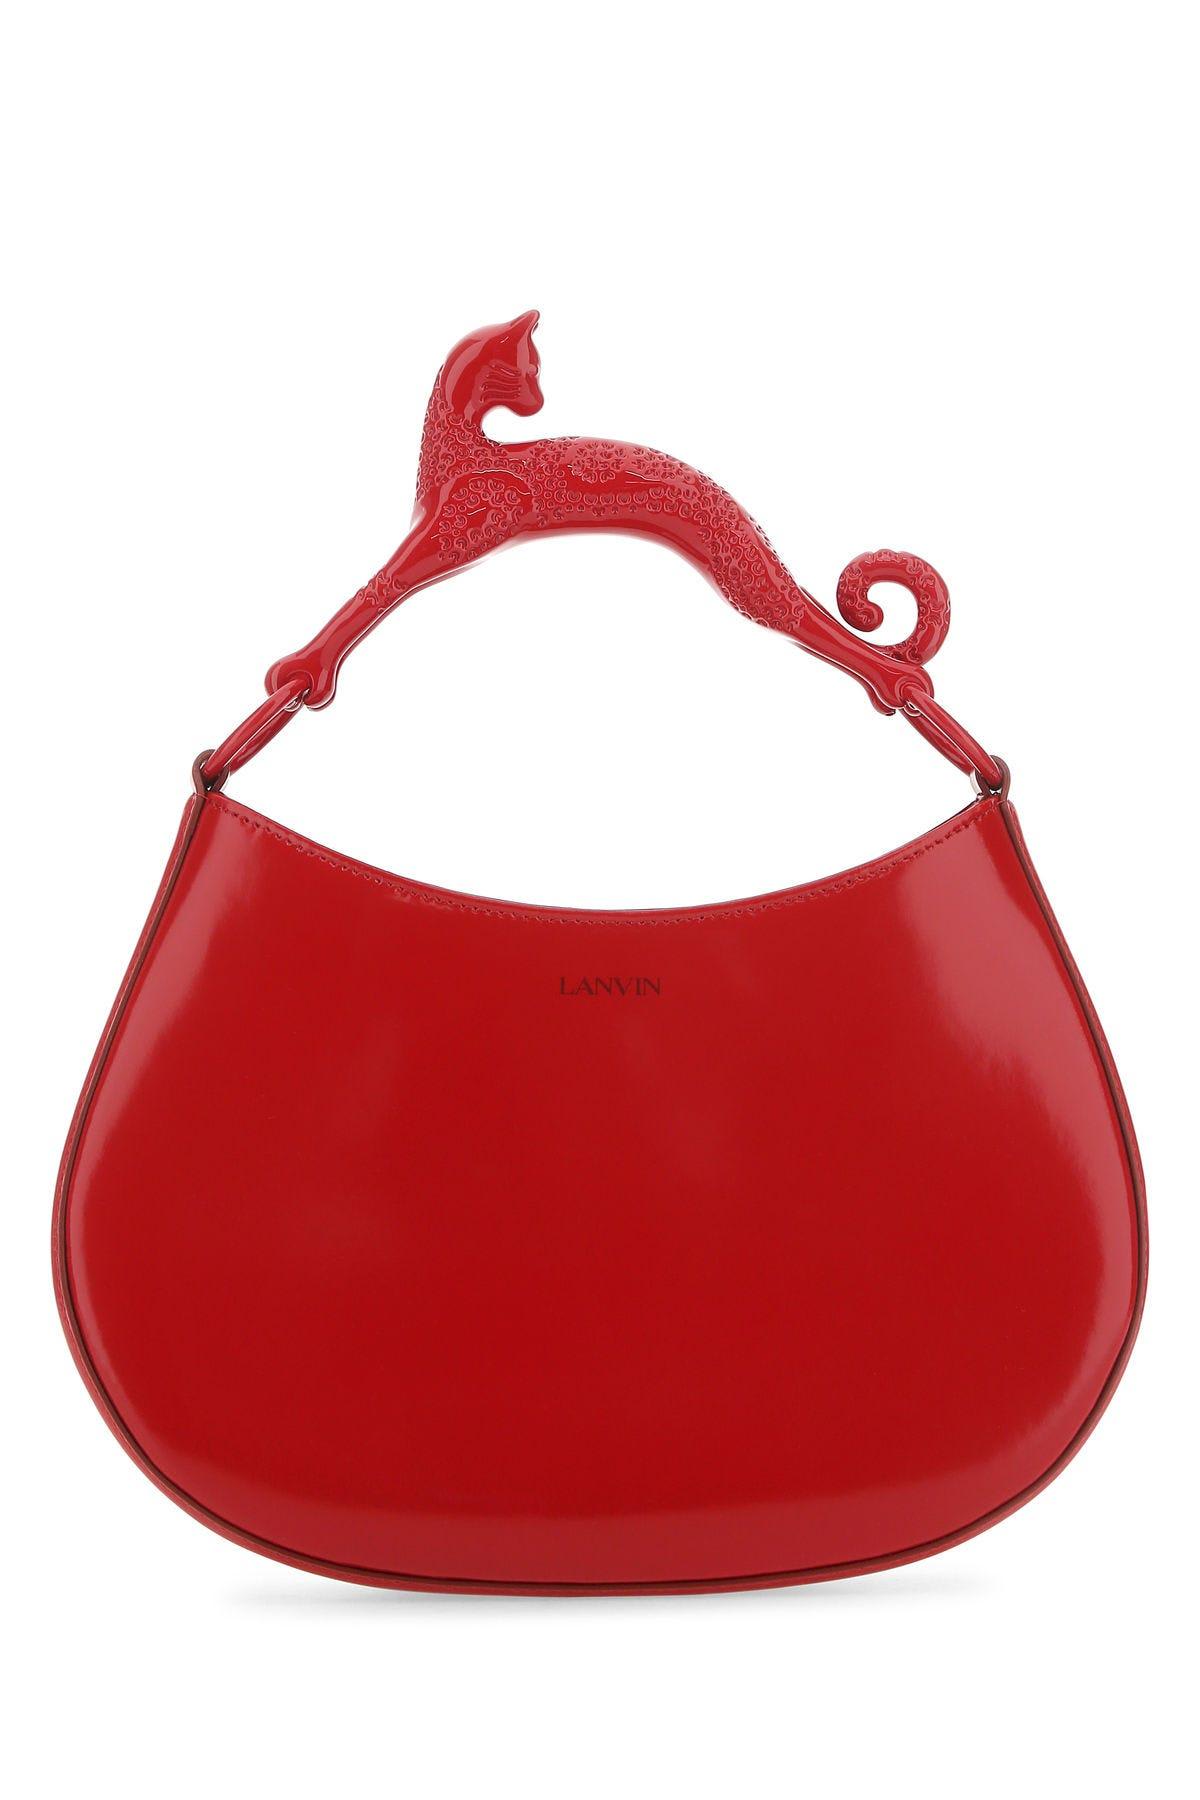 Lanvin Red Leather Cat Handbag In 303